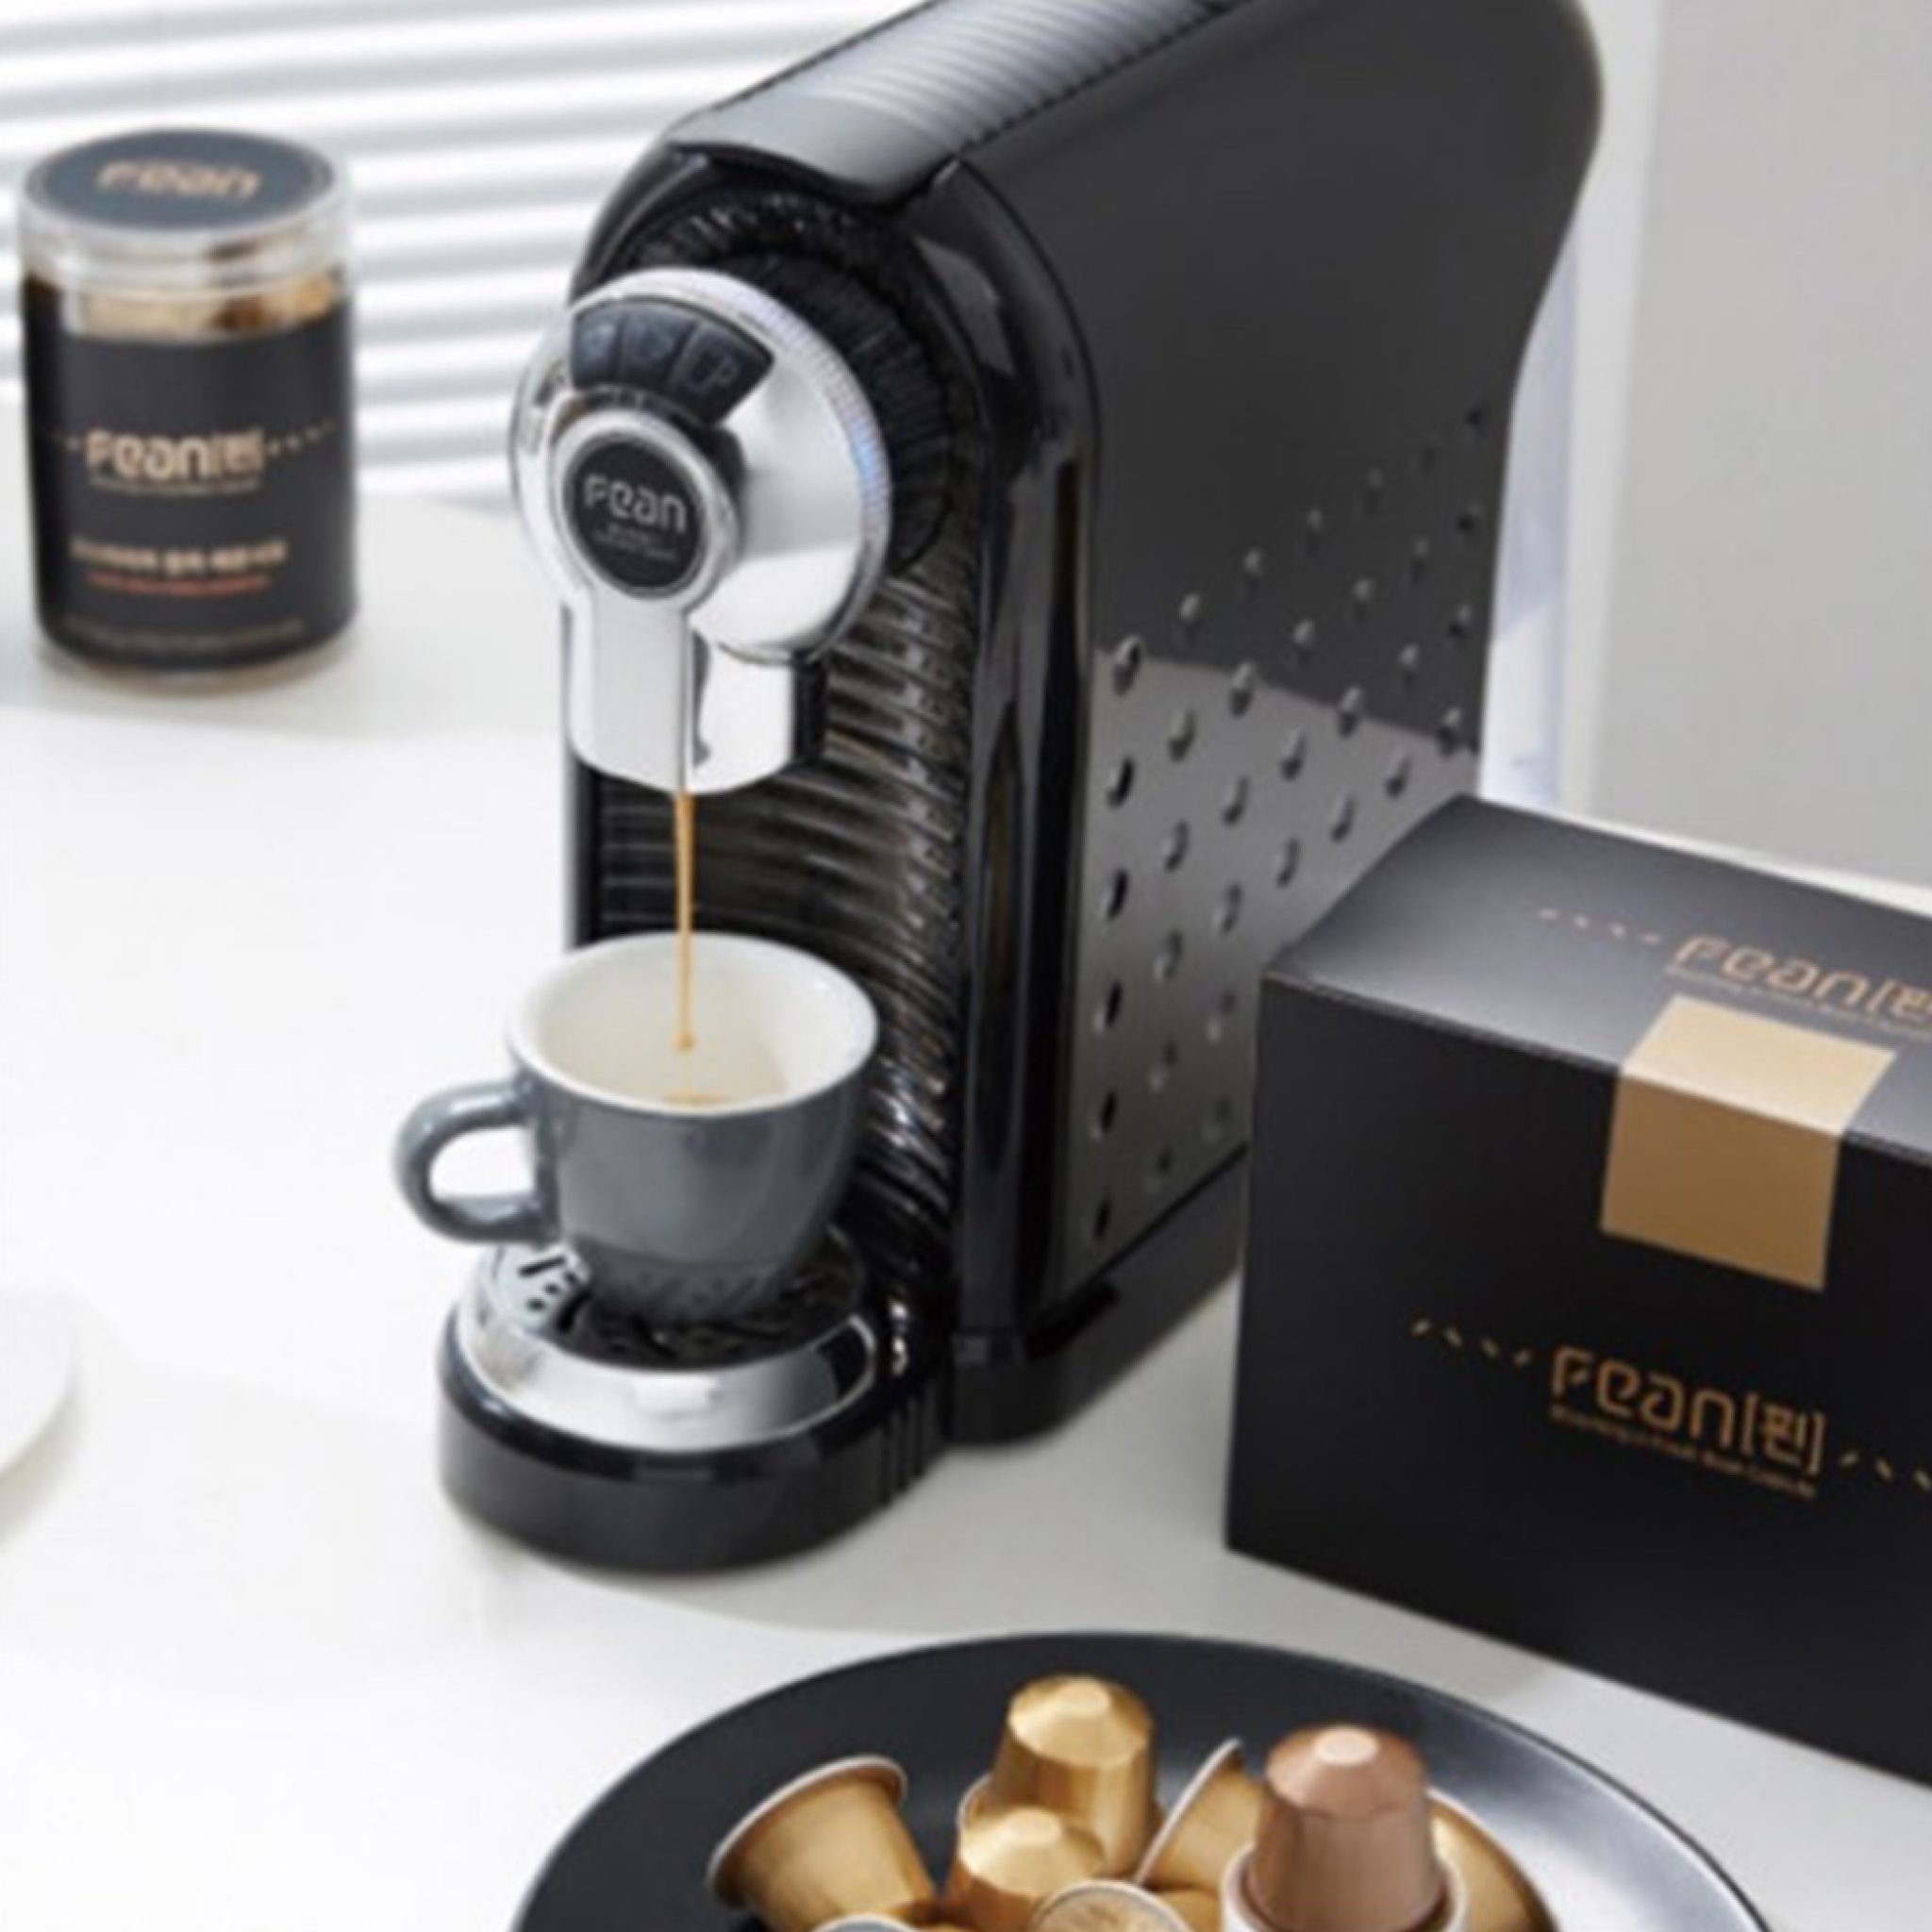 FEAN Capsule Coffee Machine 220V Black Capsule Coffee Machine Espresso Coffee Maker Image7 2048x2048 